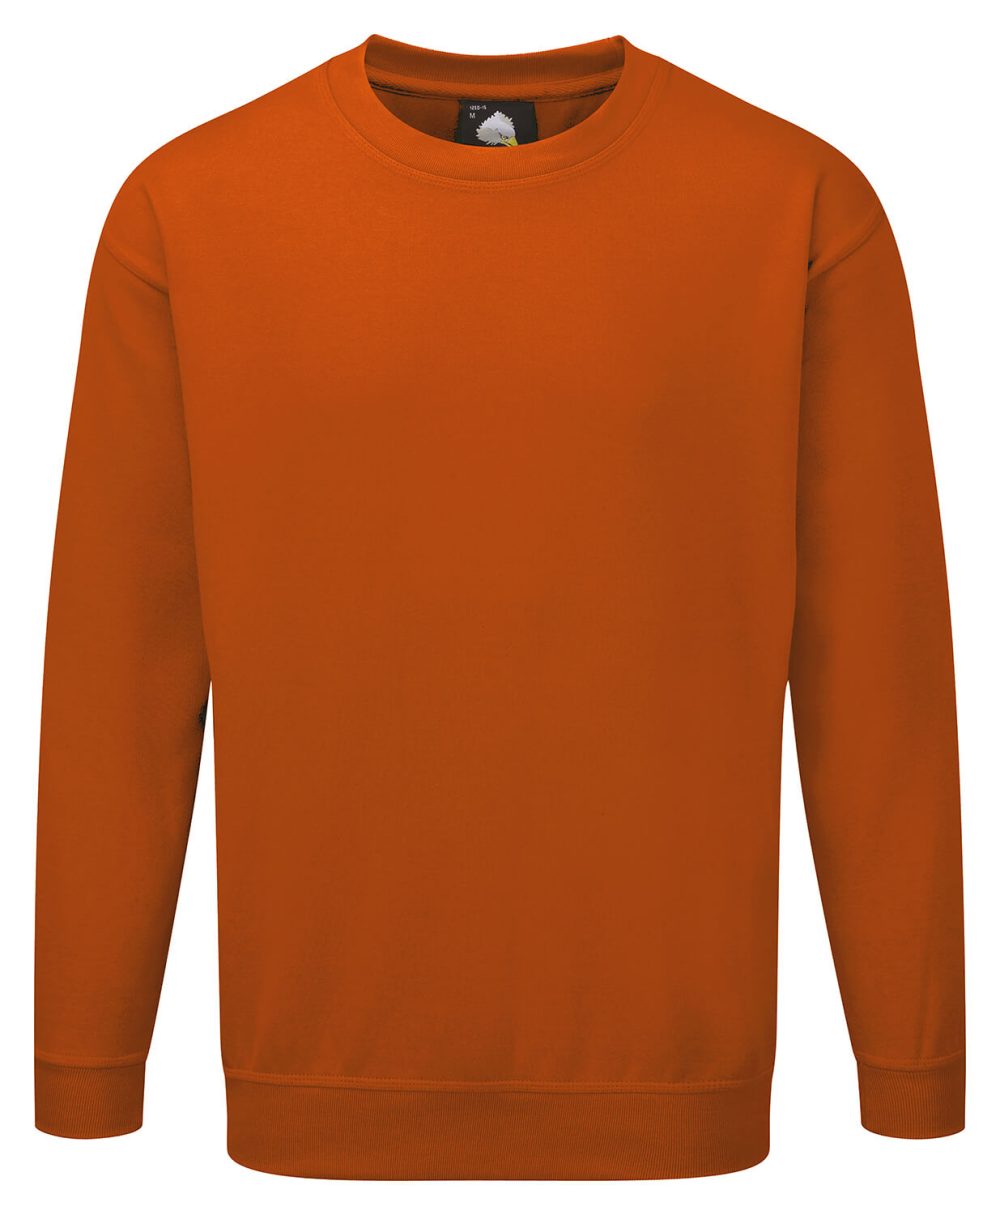 Kite Sweatshirt Orange